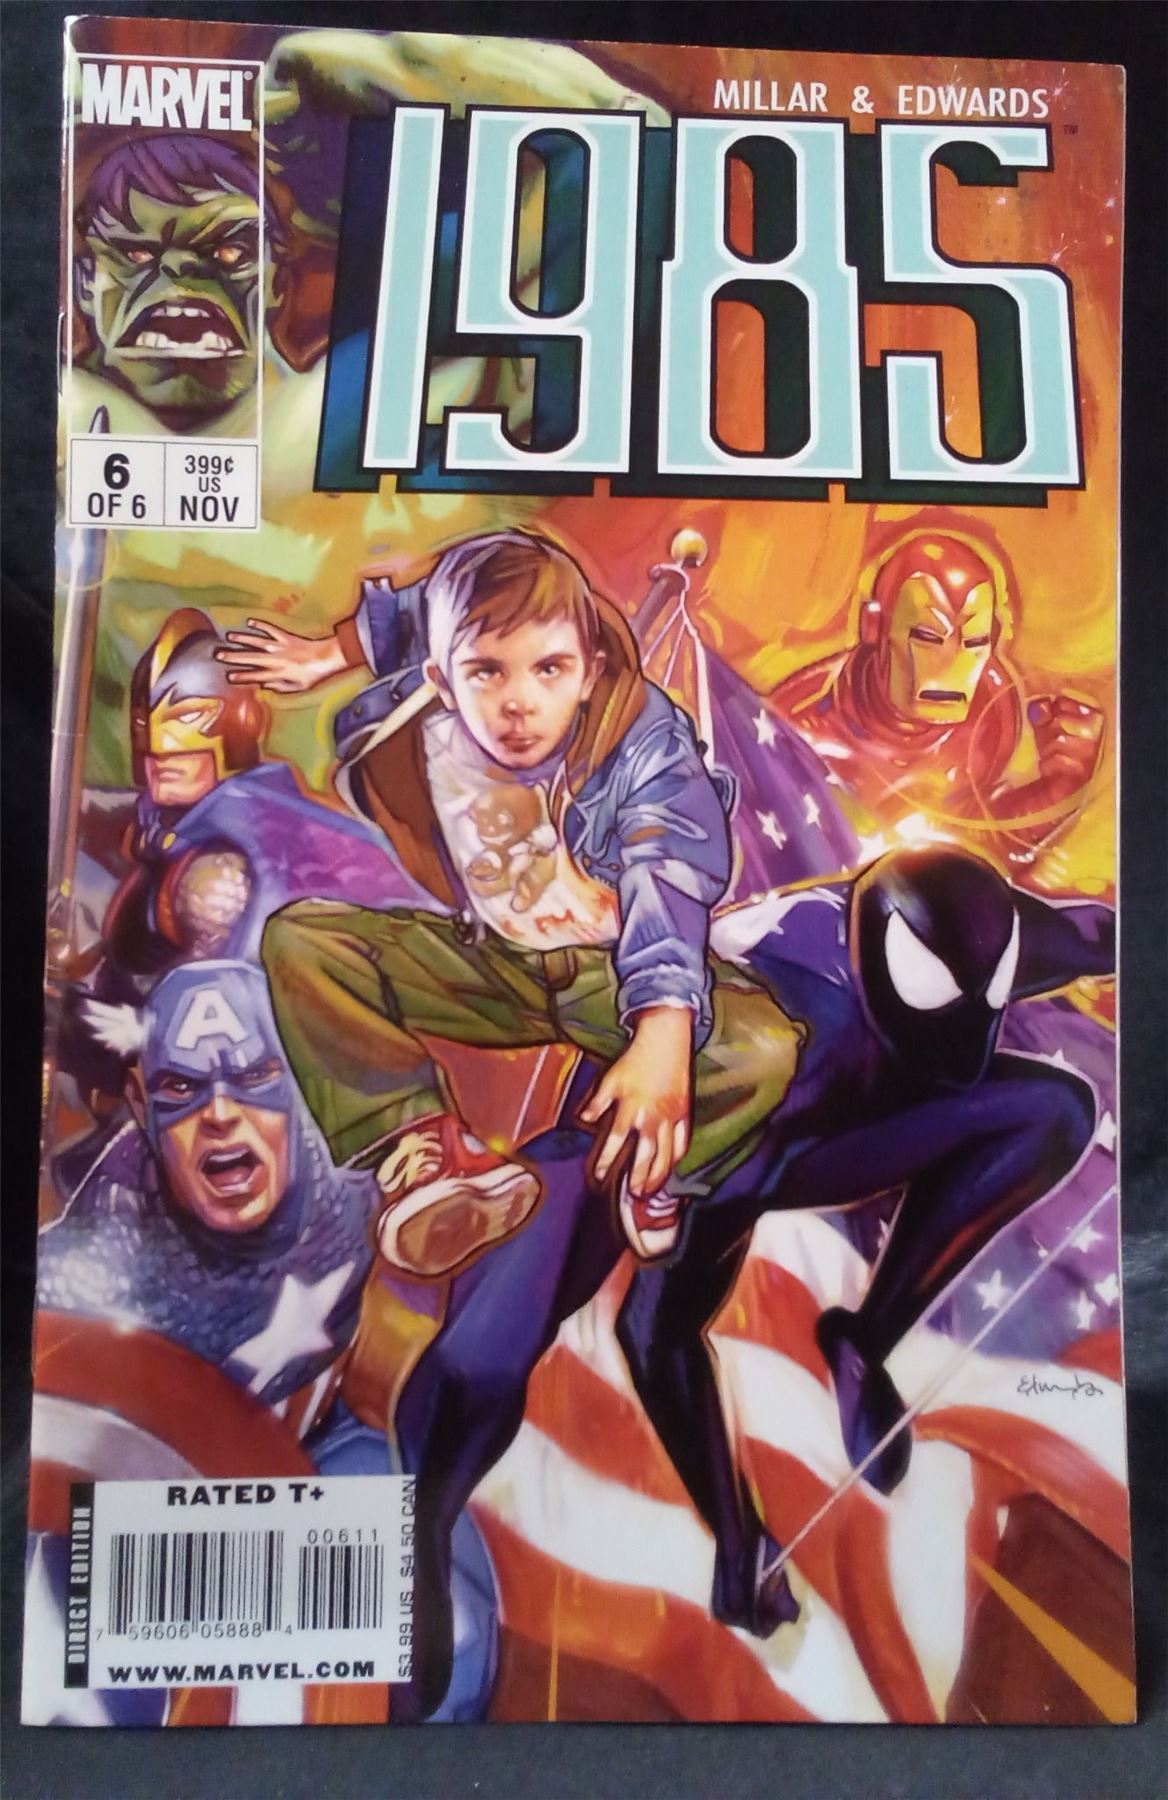 1985 #6 2008 Marvel Comics Comic Book